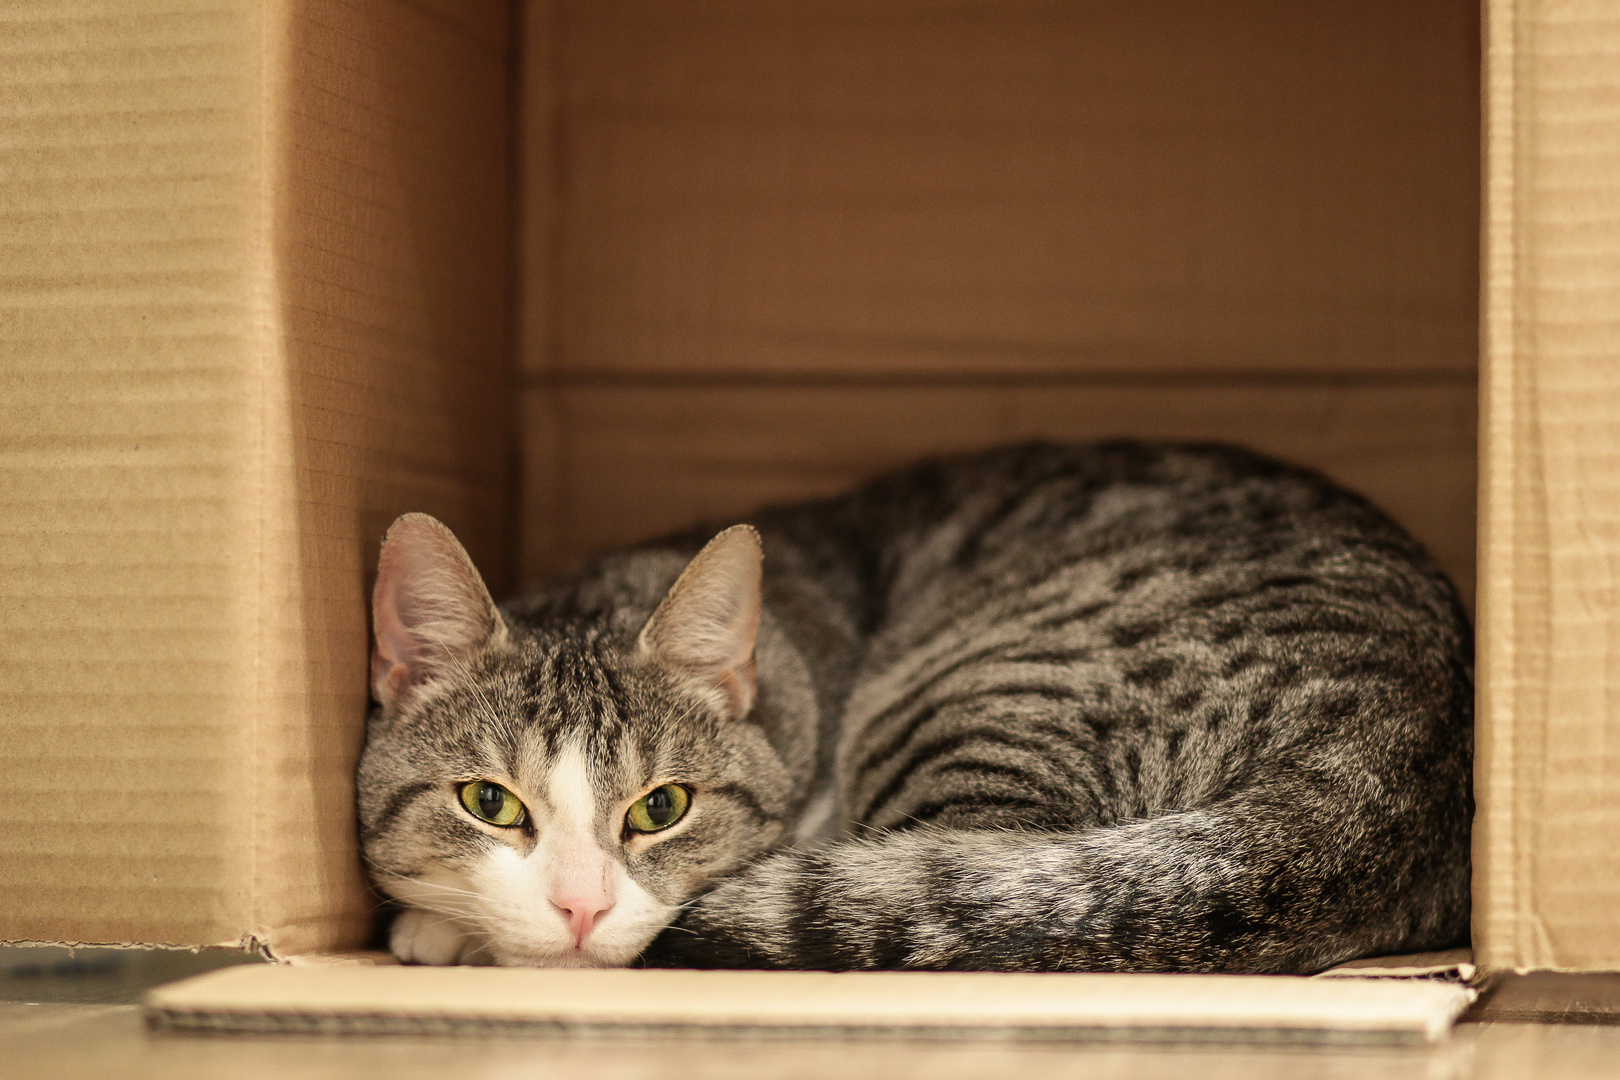 Katze im Karton